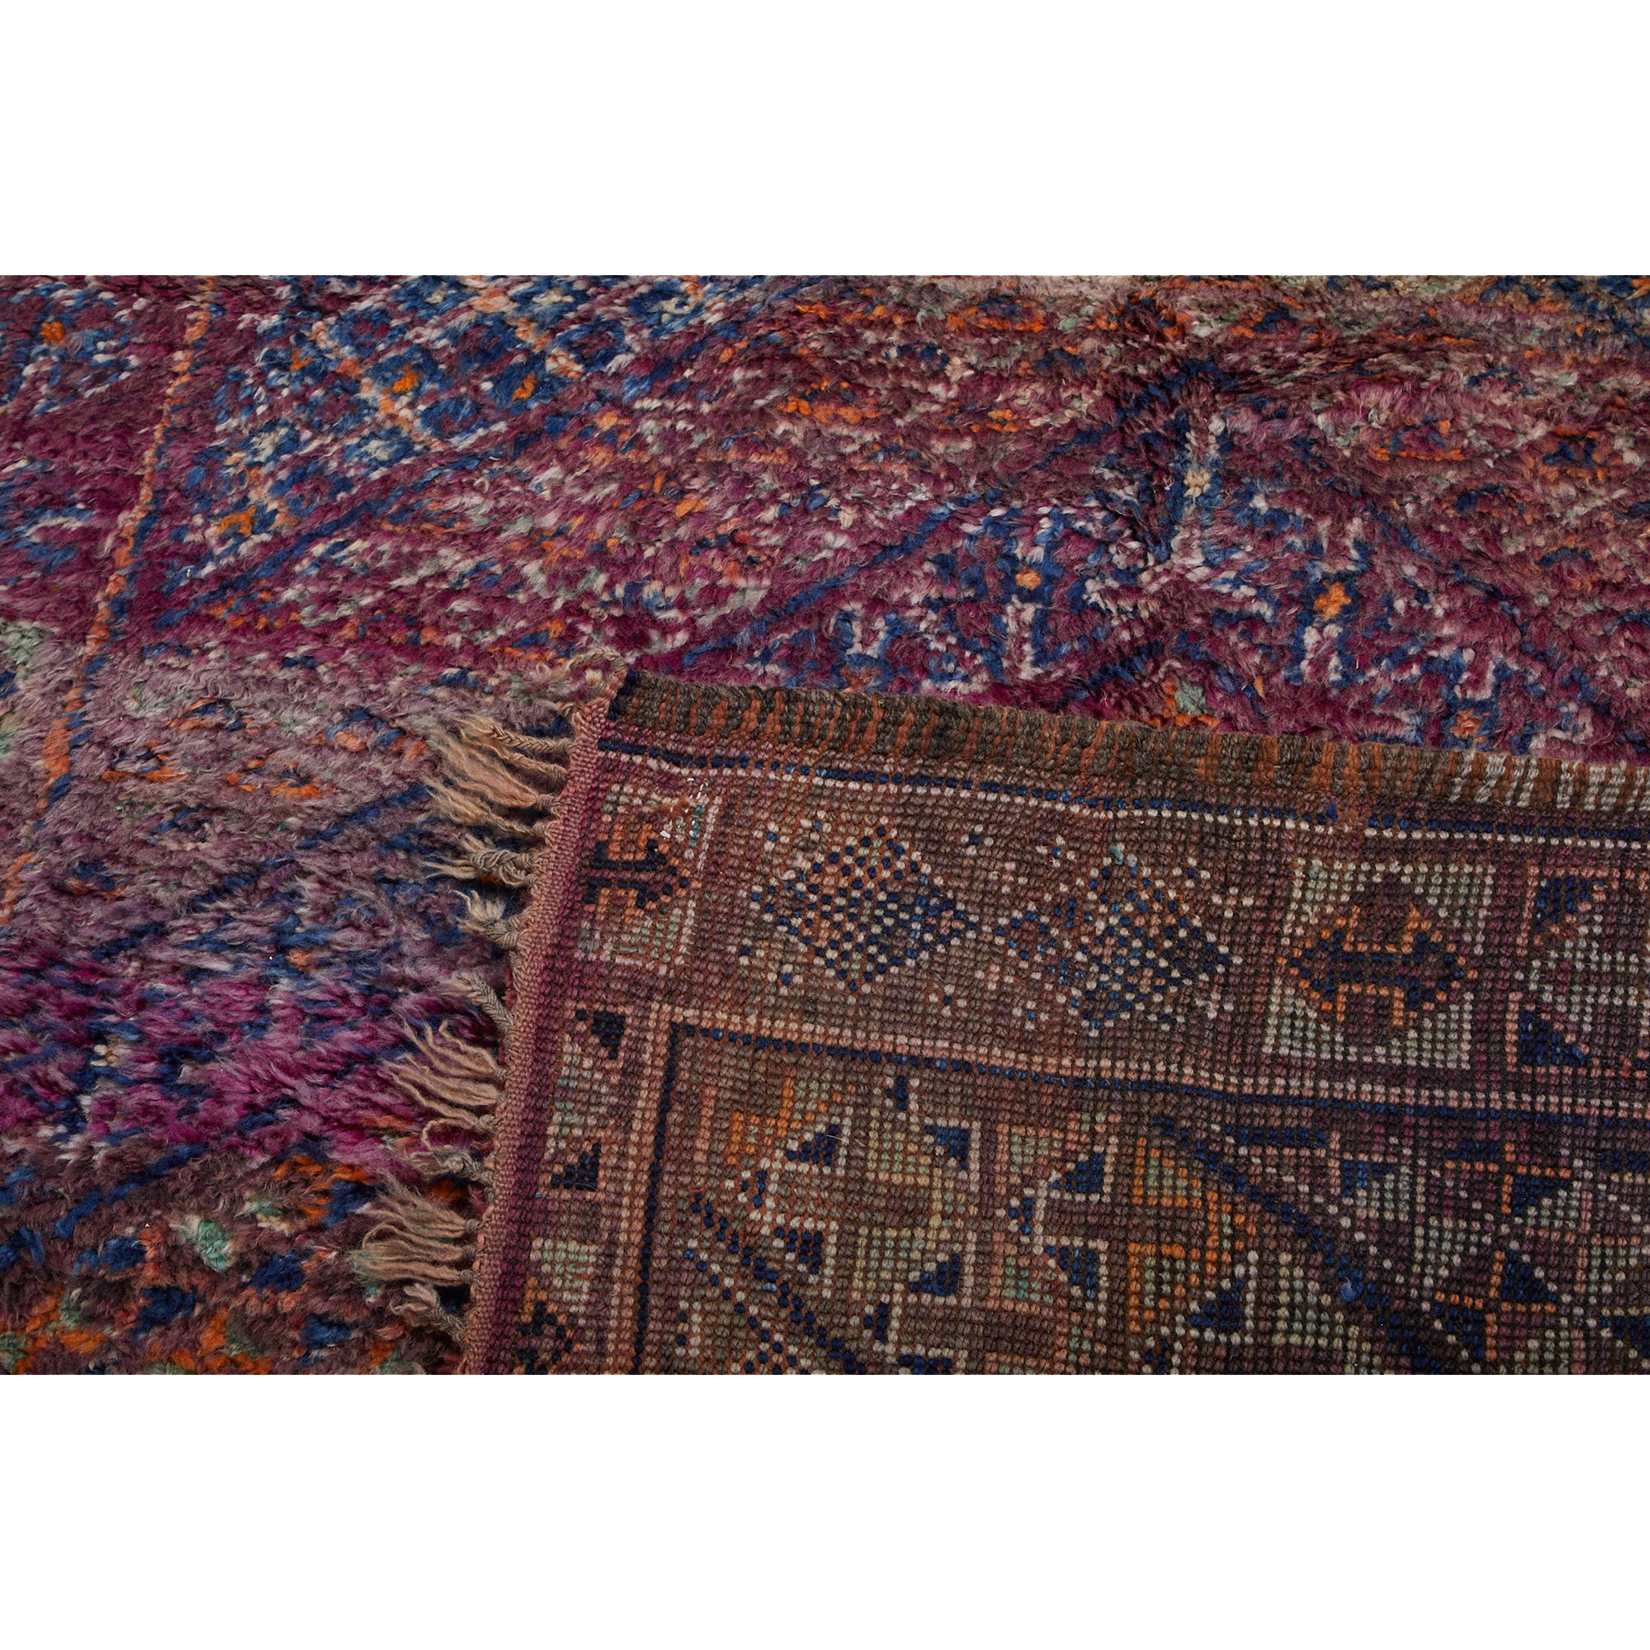 Purple Moroccan area rug with geometric pattern design - Kantara | Moroccan Rugs